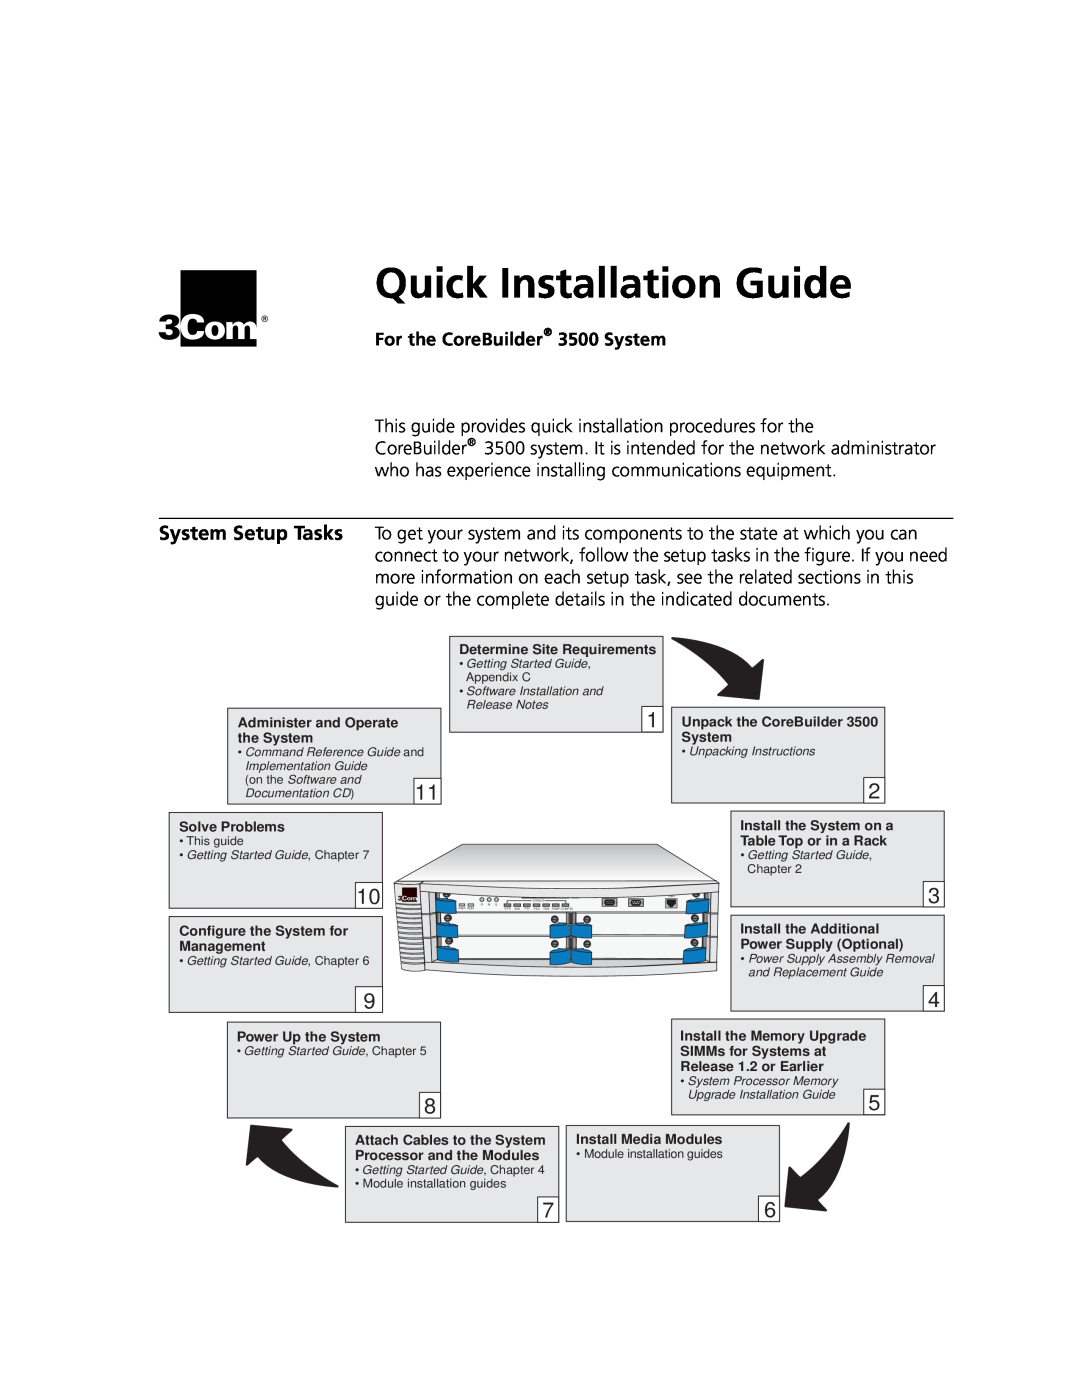 3Com appendix For the CoreBuilder 3500 System, Quick Installation Guide 